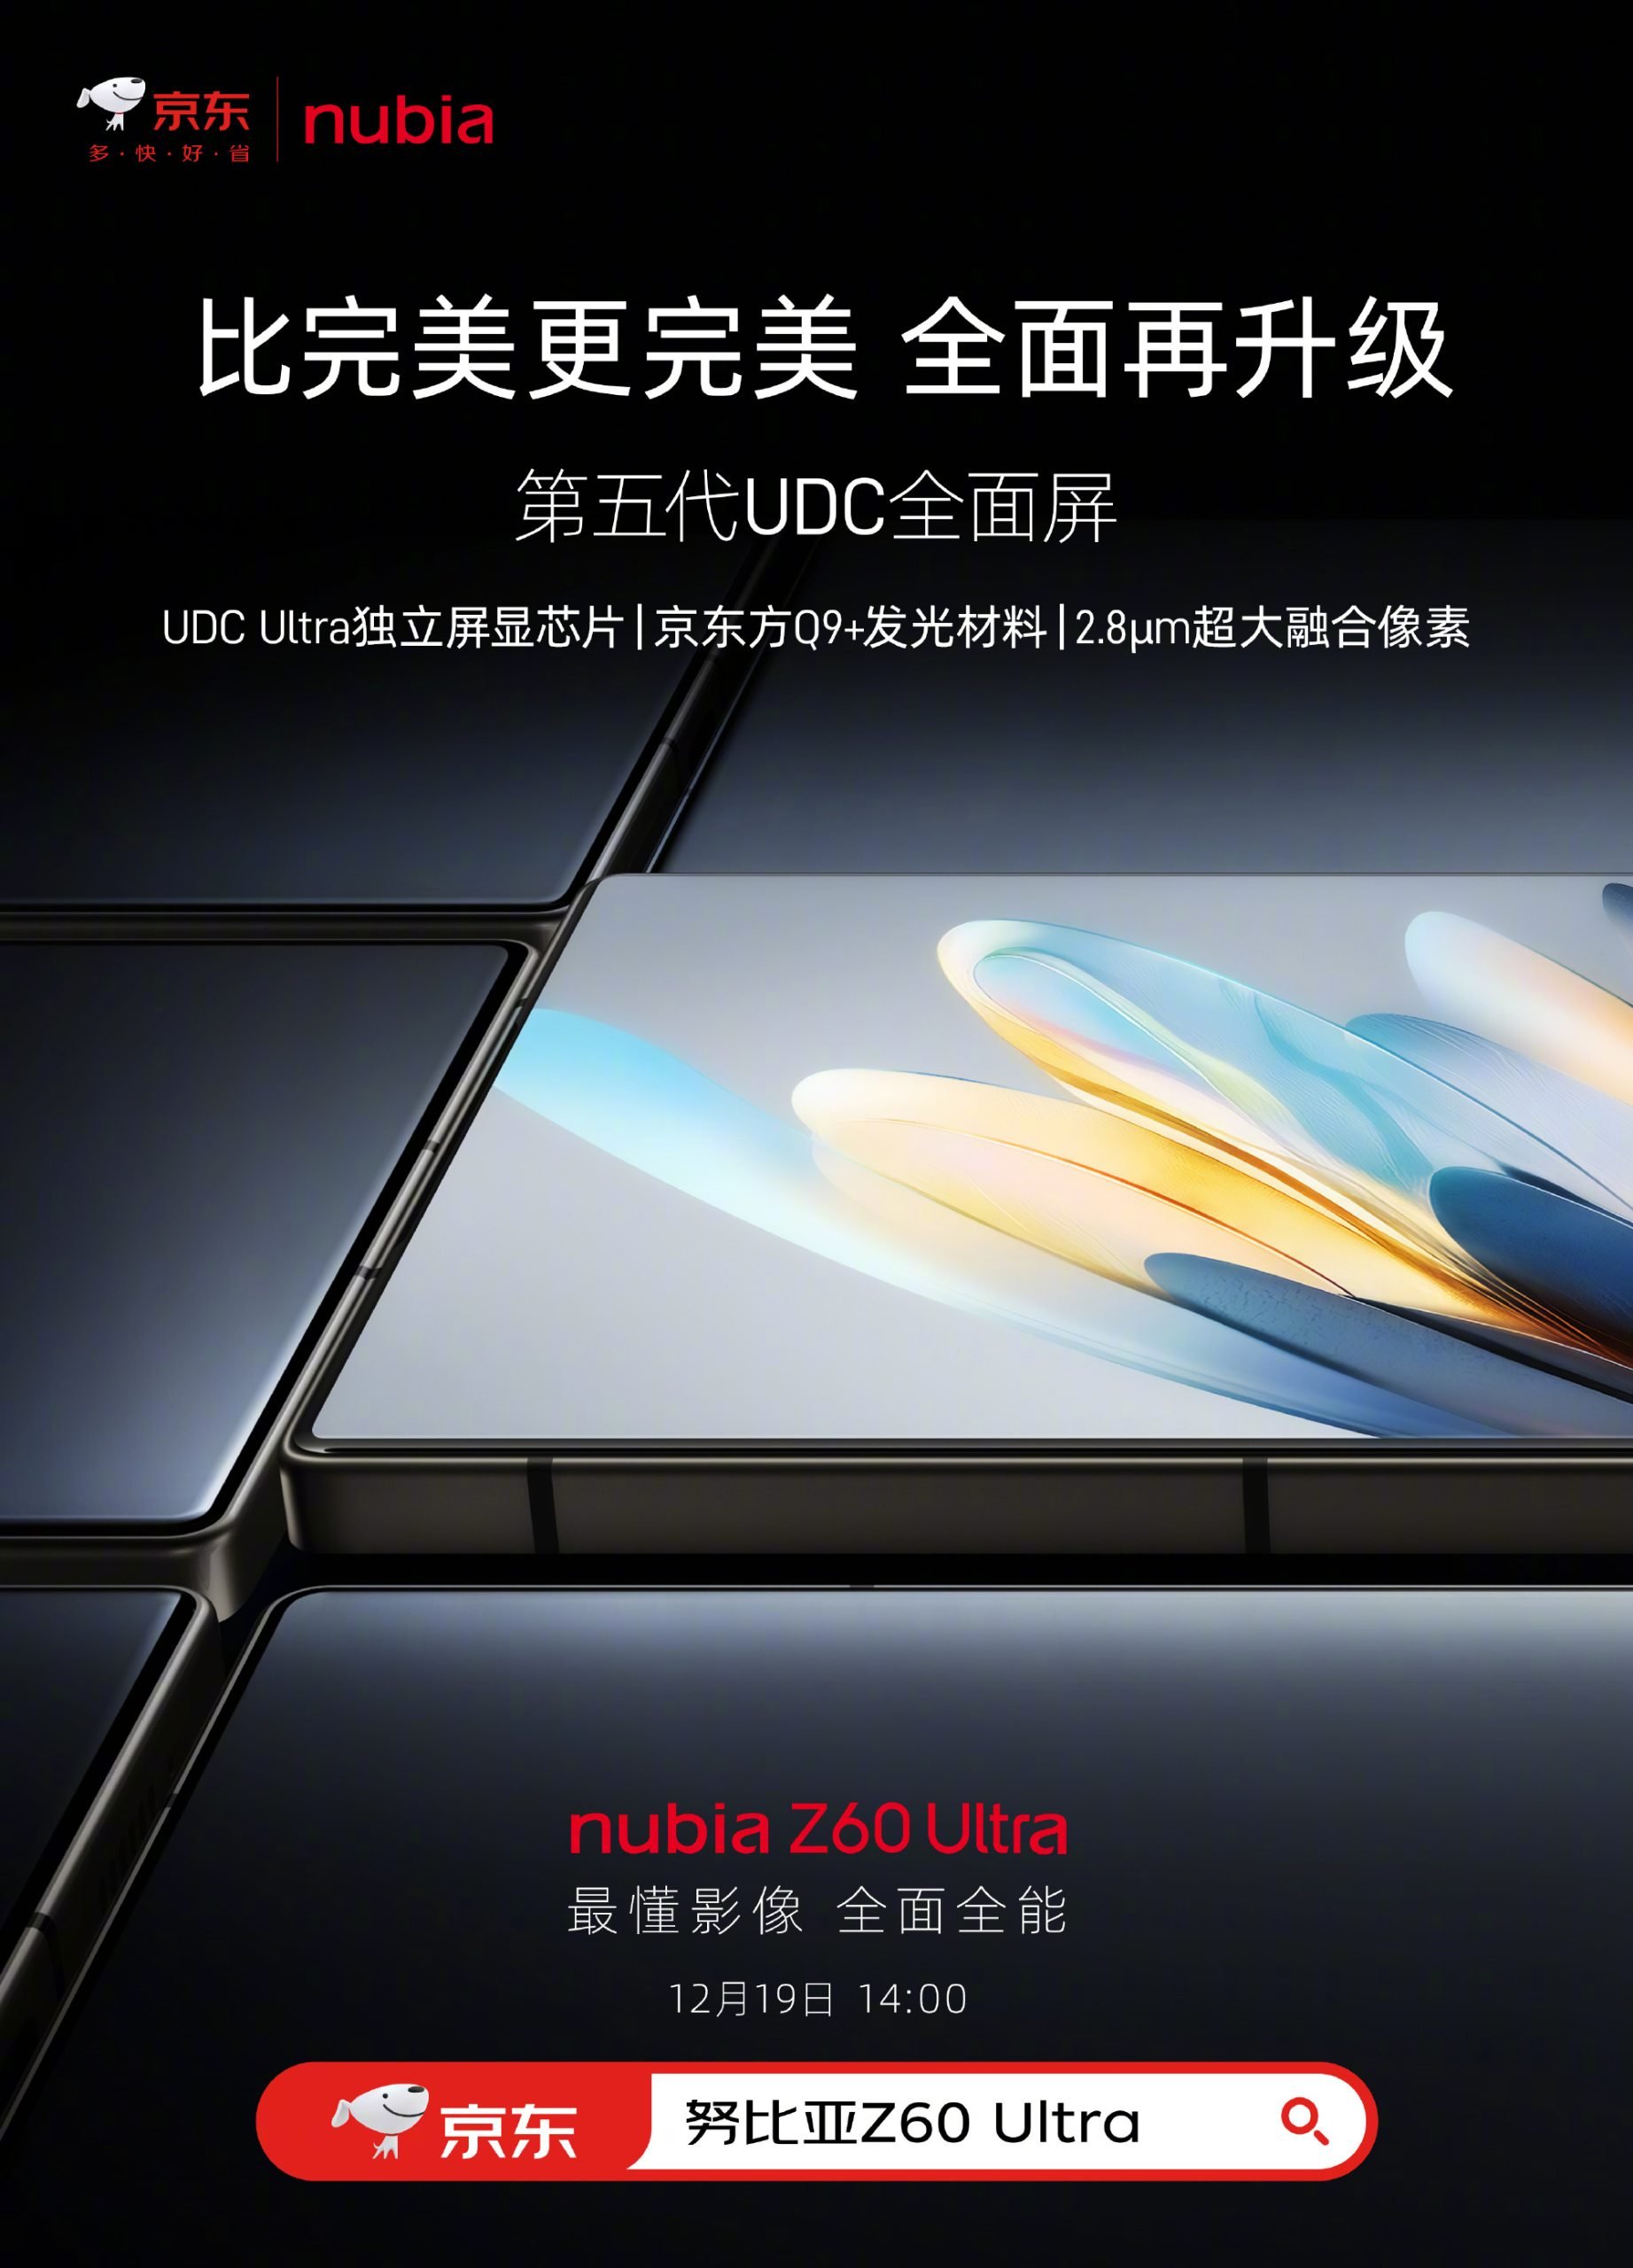 Nubia Z60 Ultra under-display caemra